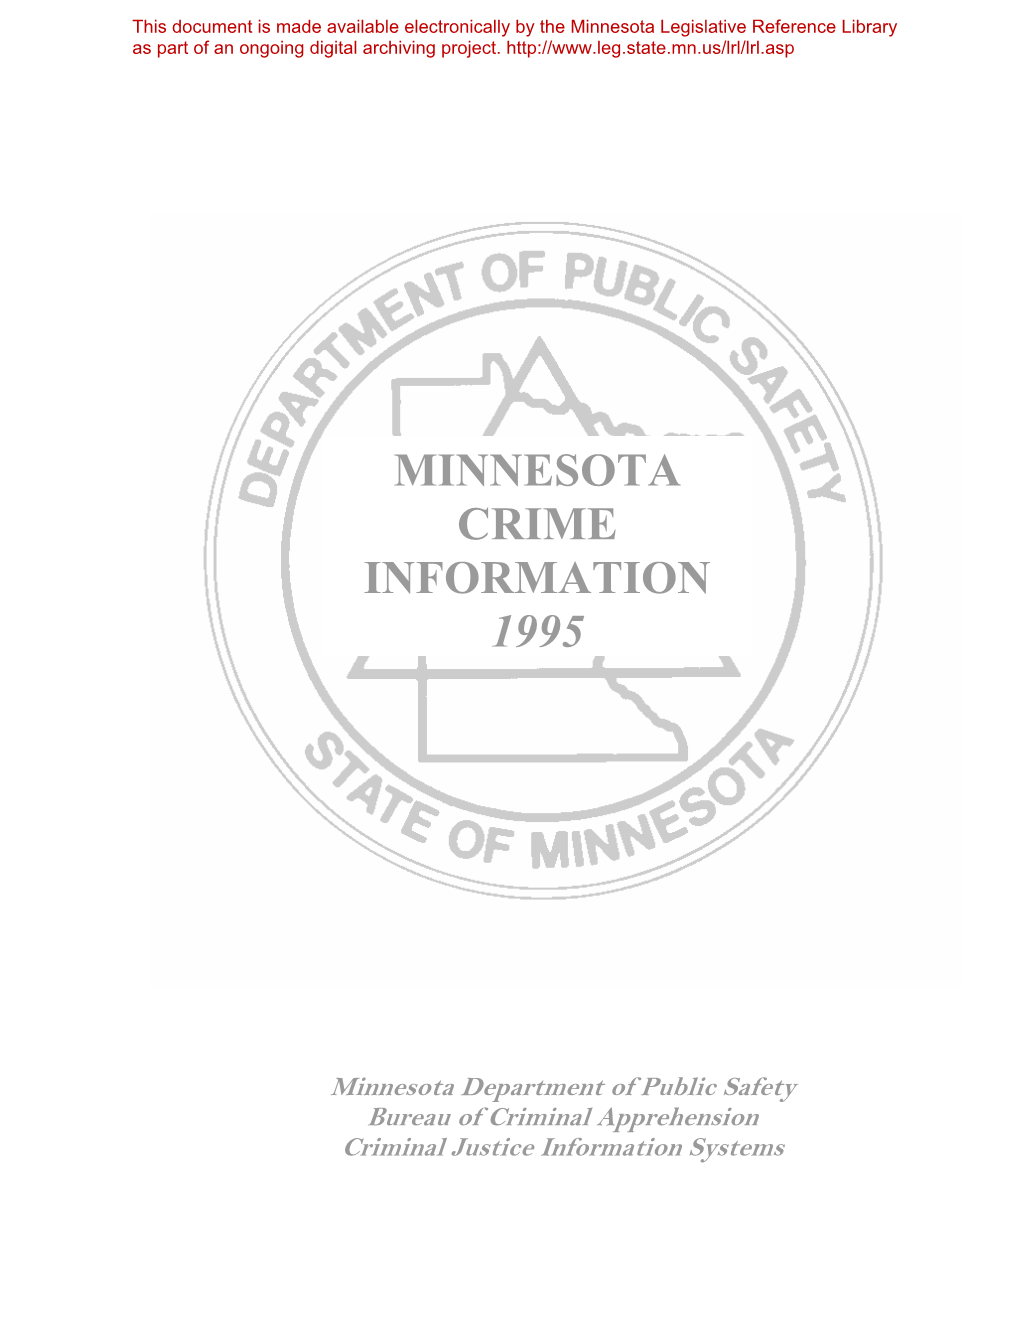 Minnesota Crime Information 1995